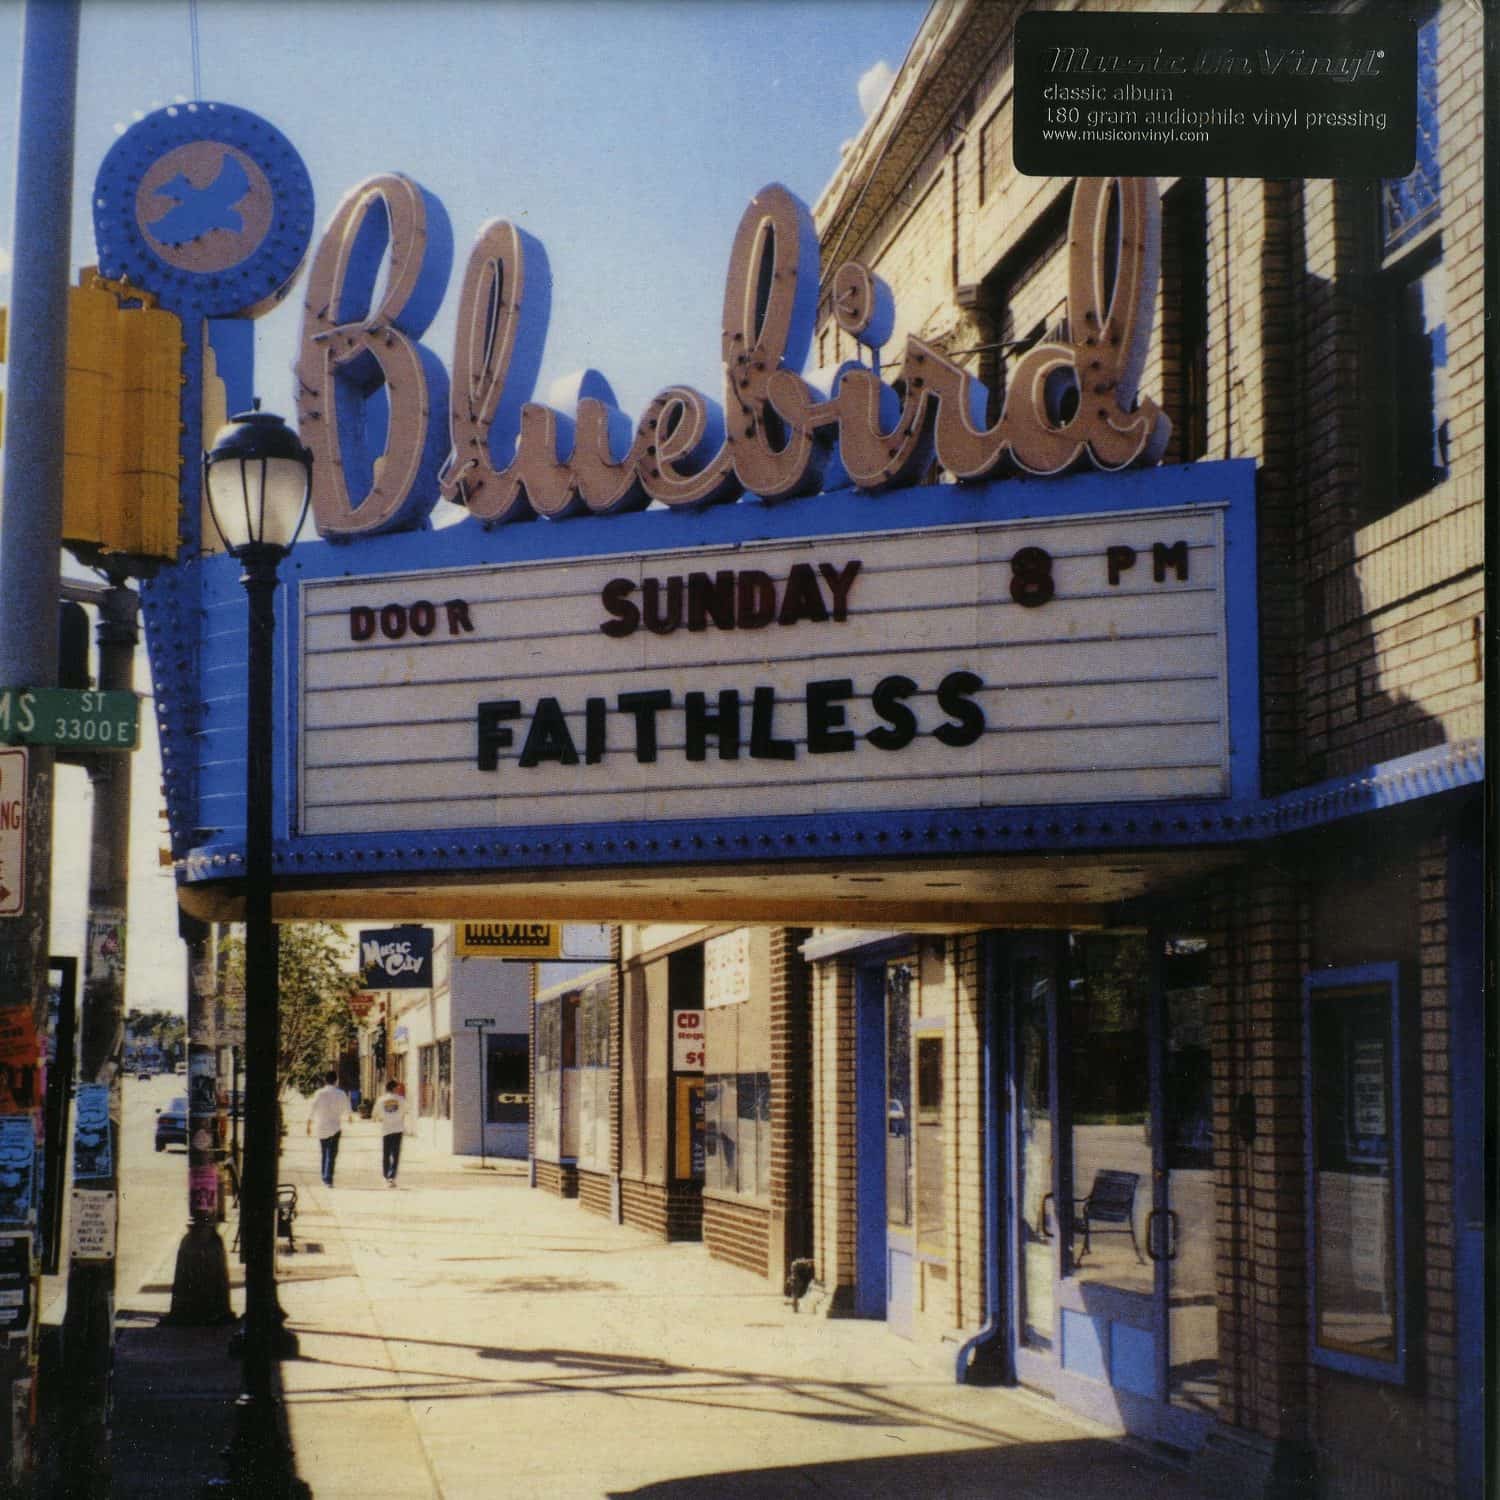 Faithless - SUNDAY 8 PM 